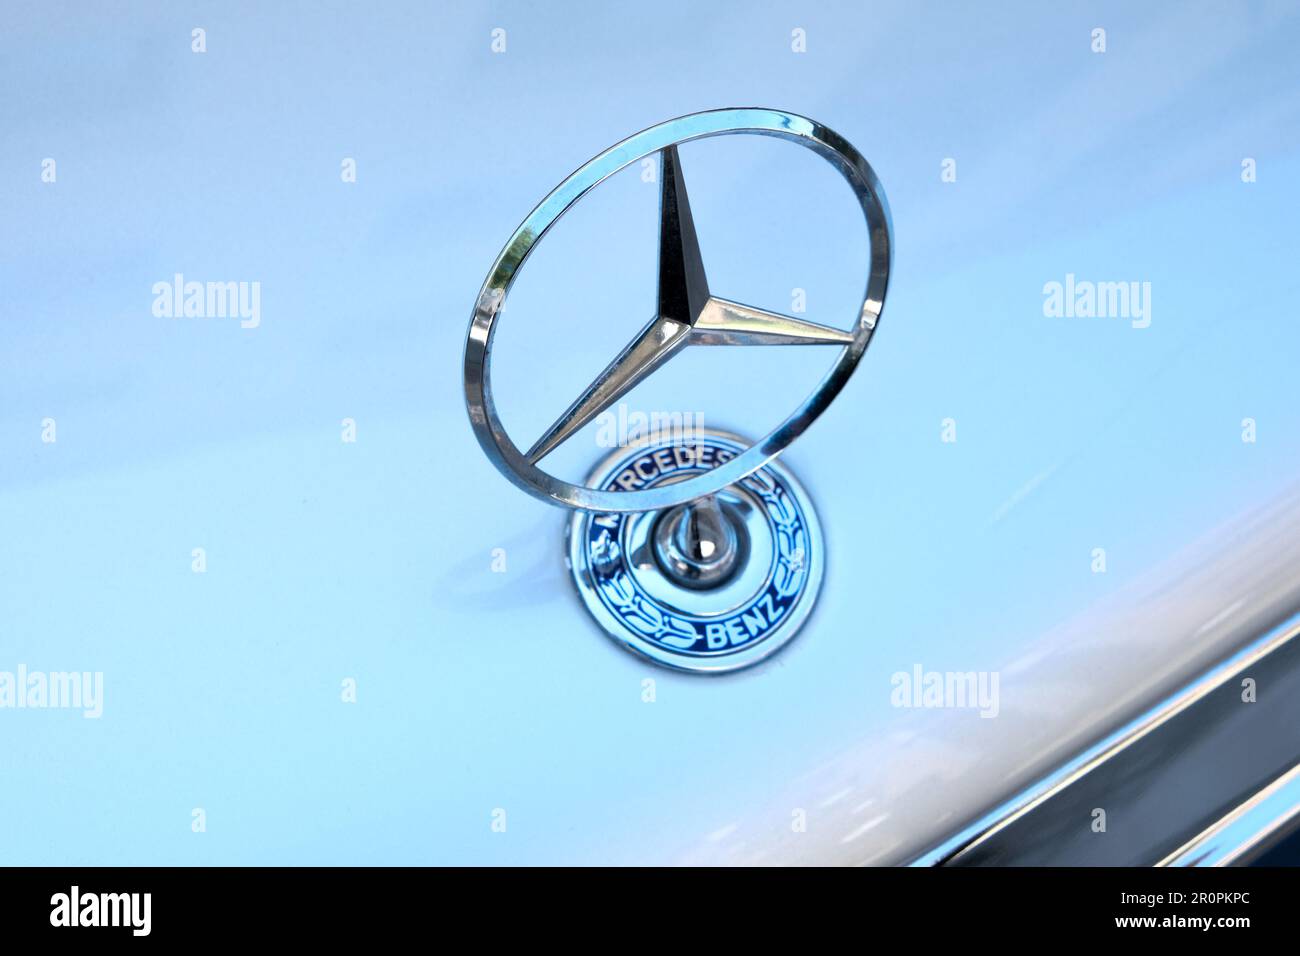 Car logos hi-res stock photography and images - Alamy